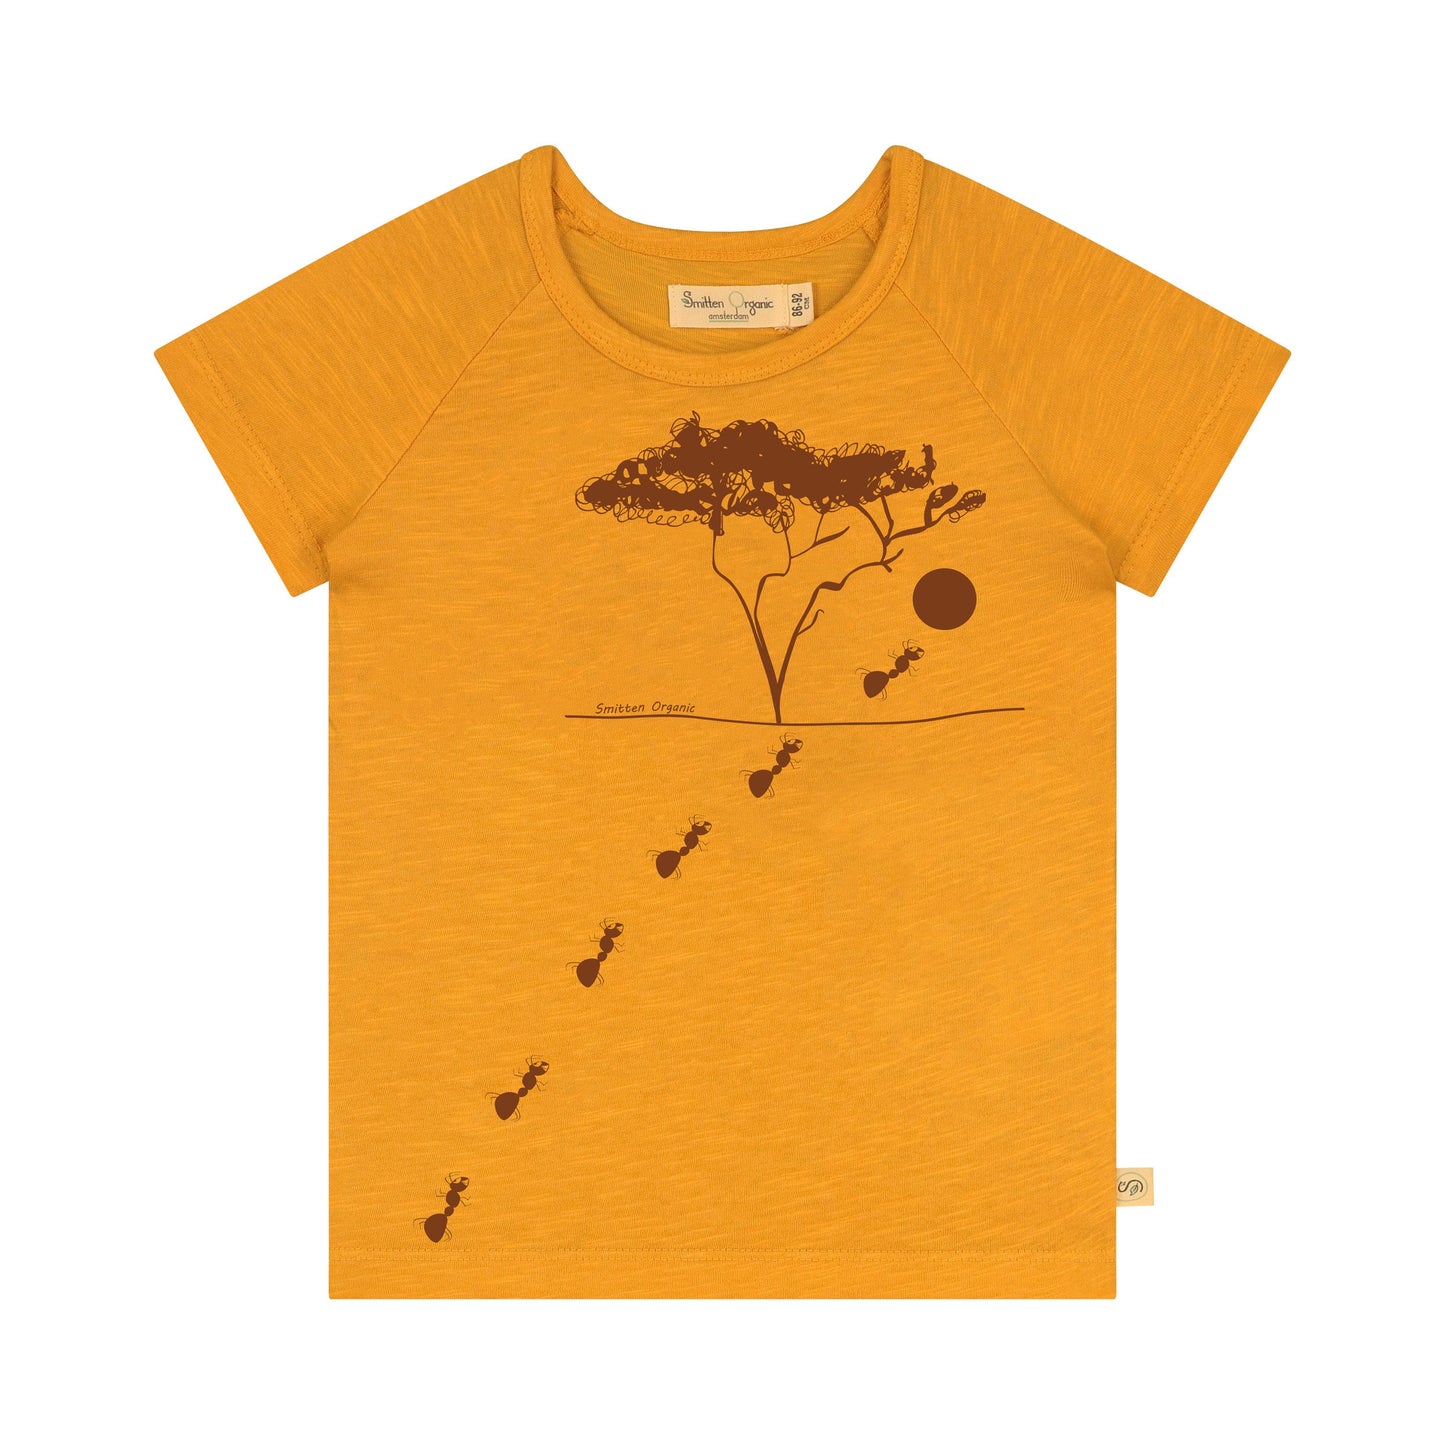 Akazienbaum im Safari-Kurzarm-Gelb-T-Shirt